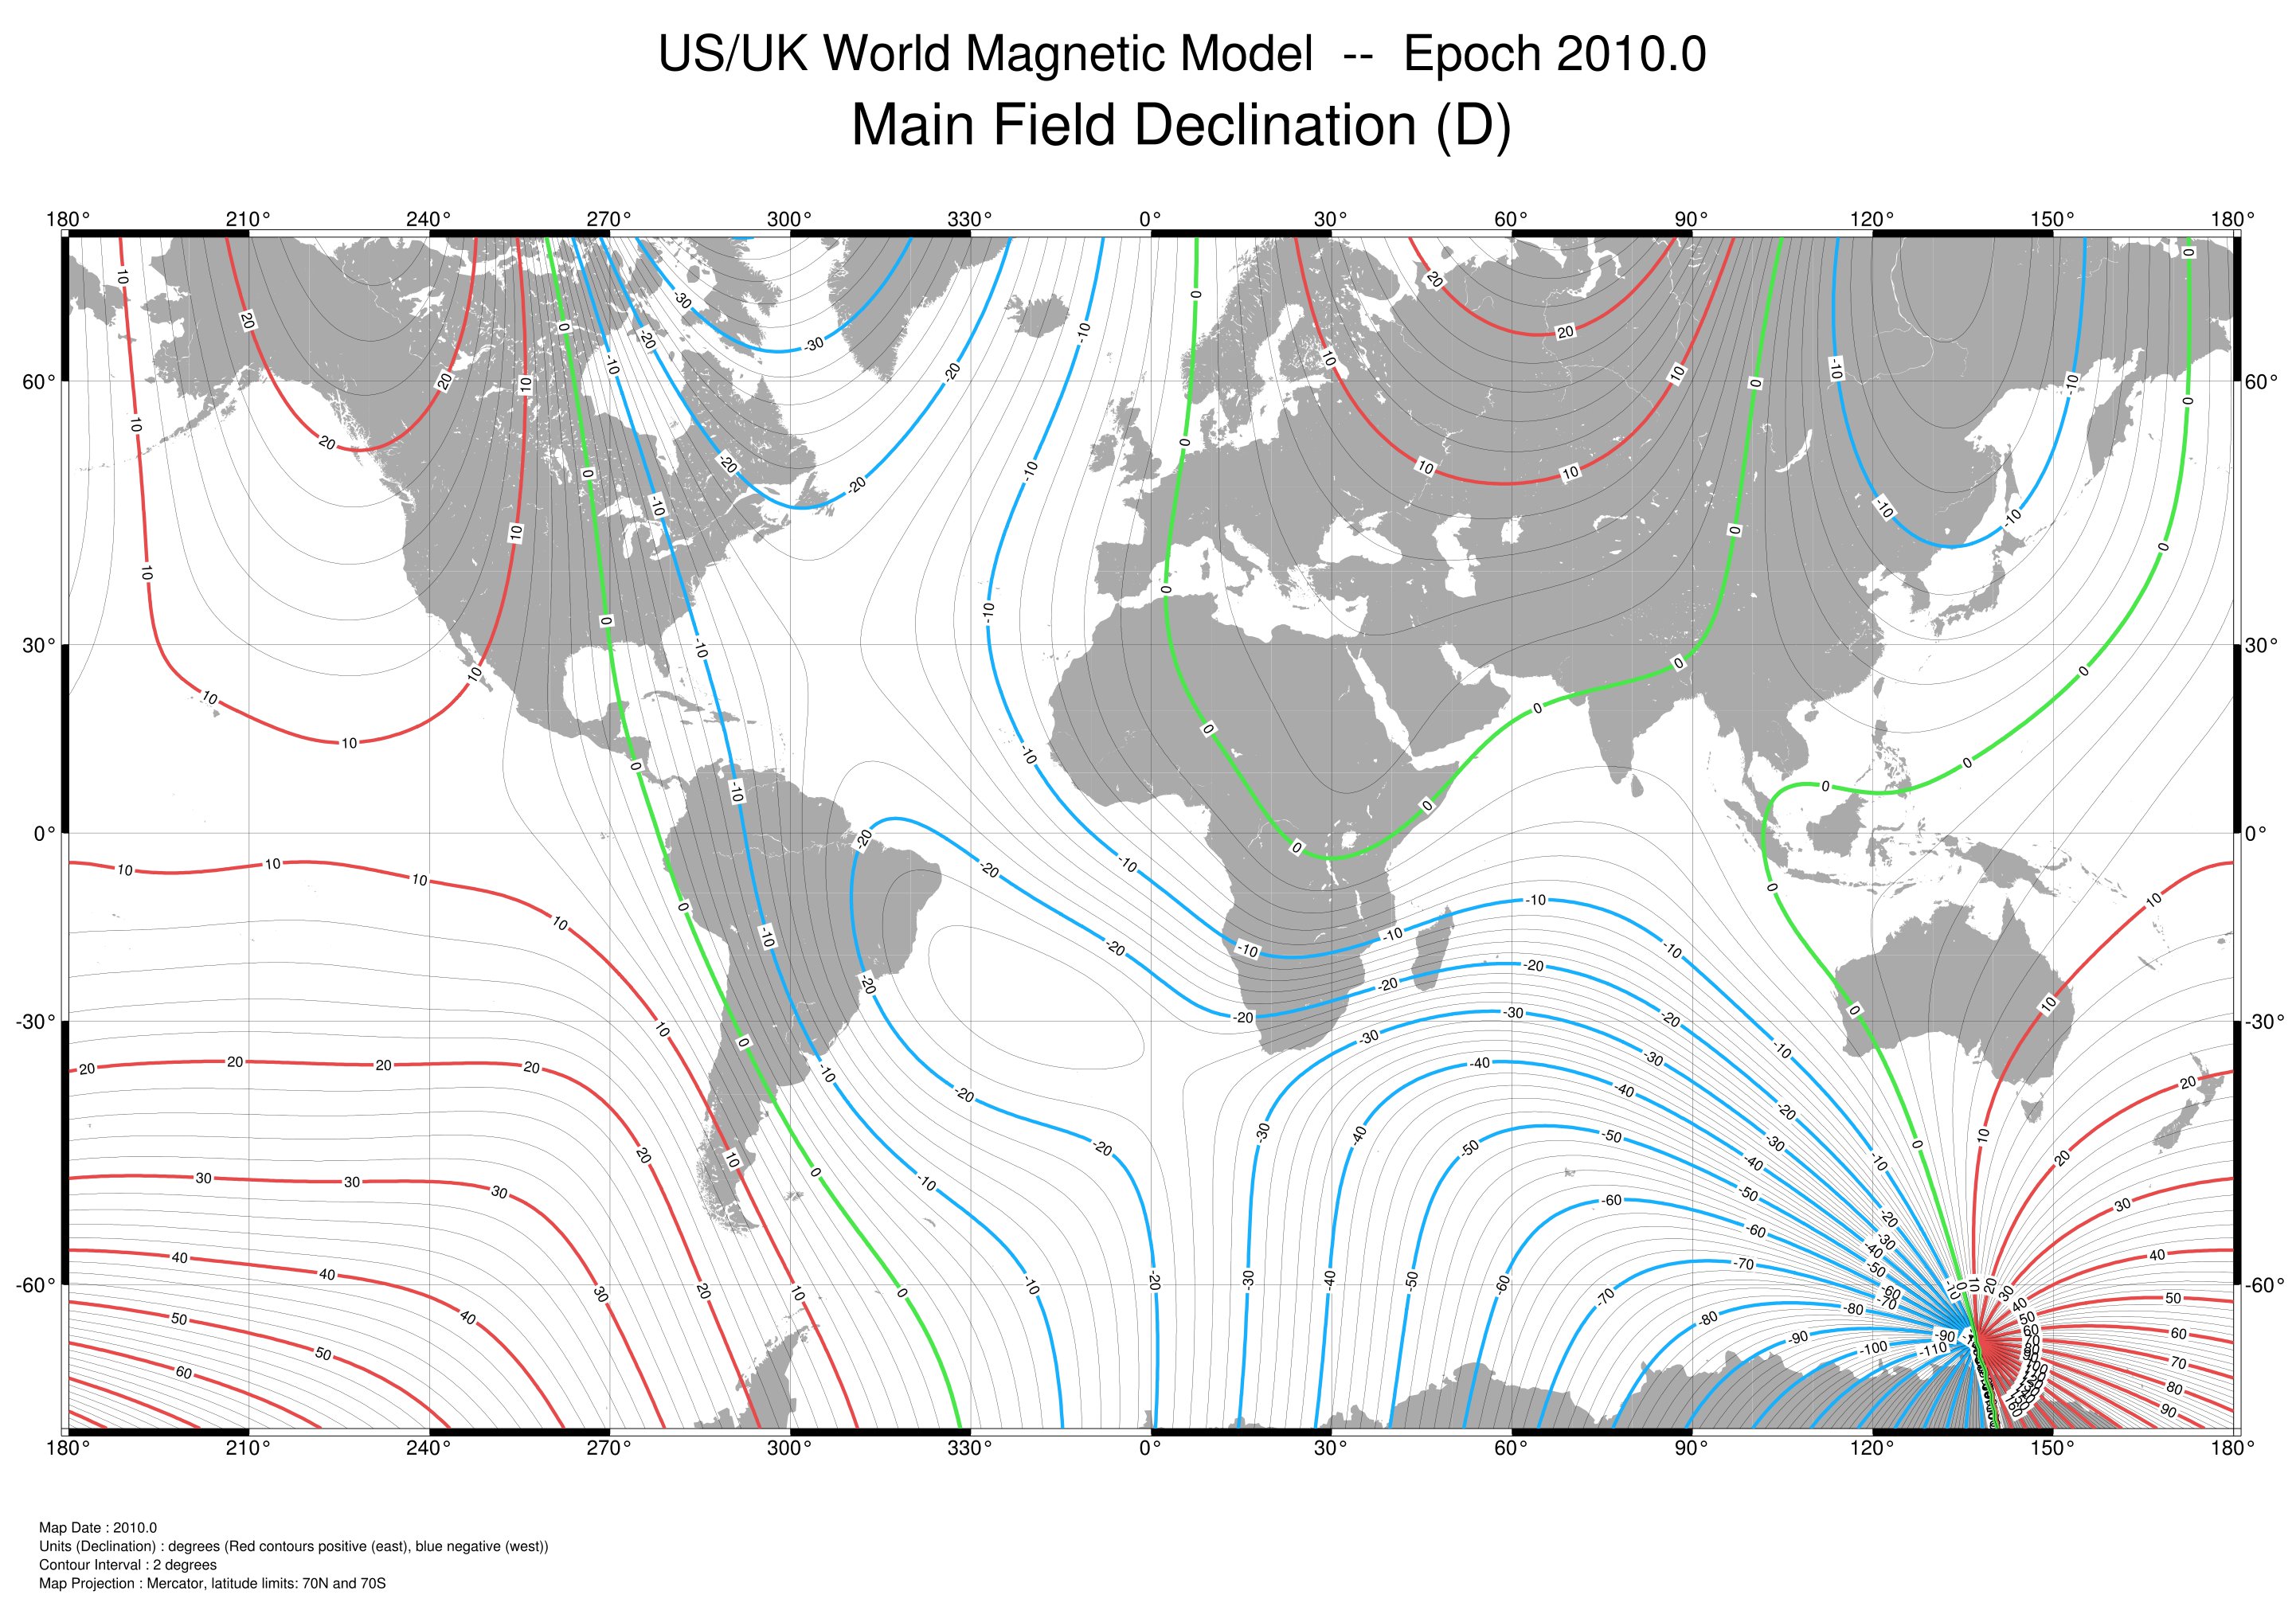 Us/uk World Magnetic model - Epoch 2020.0 Geomagnetic Longitude and Latitude. Reference field